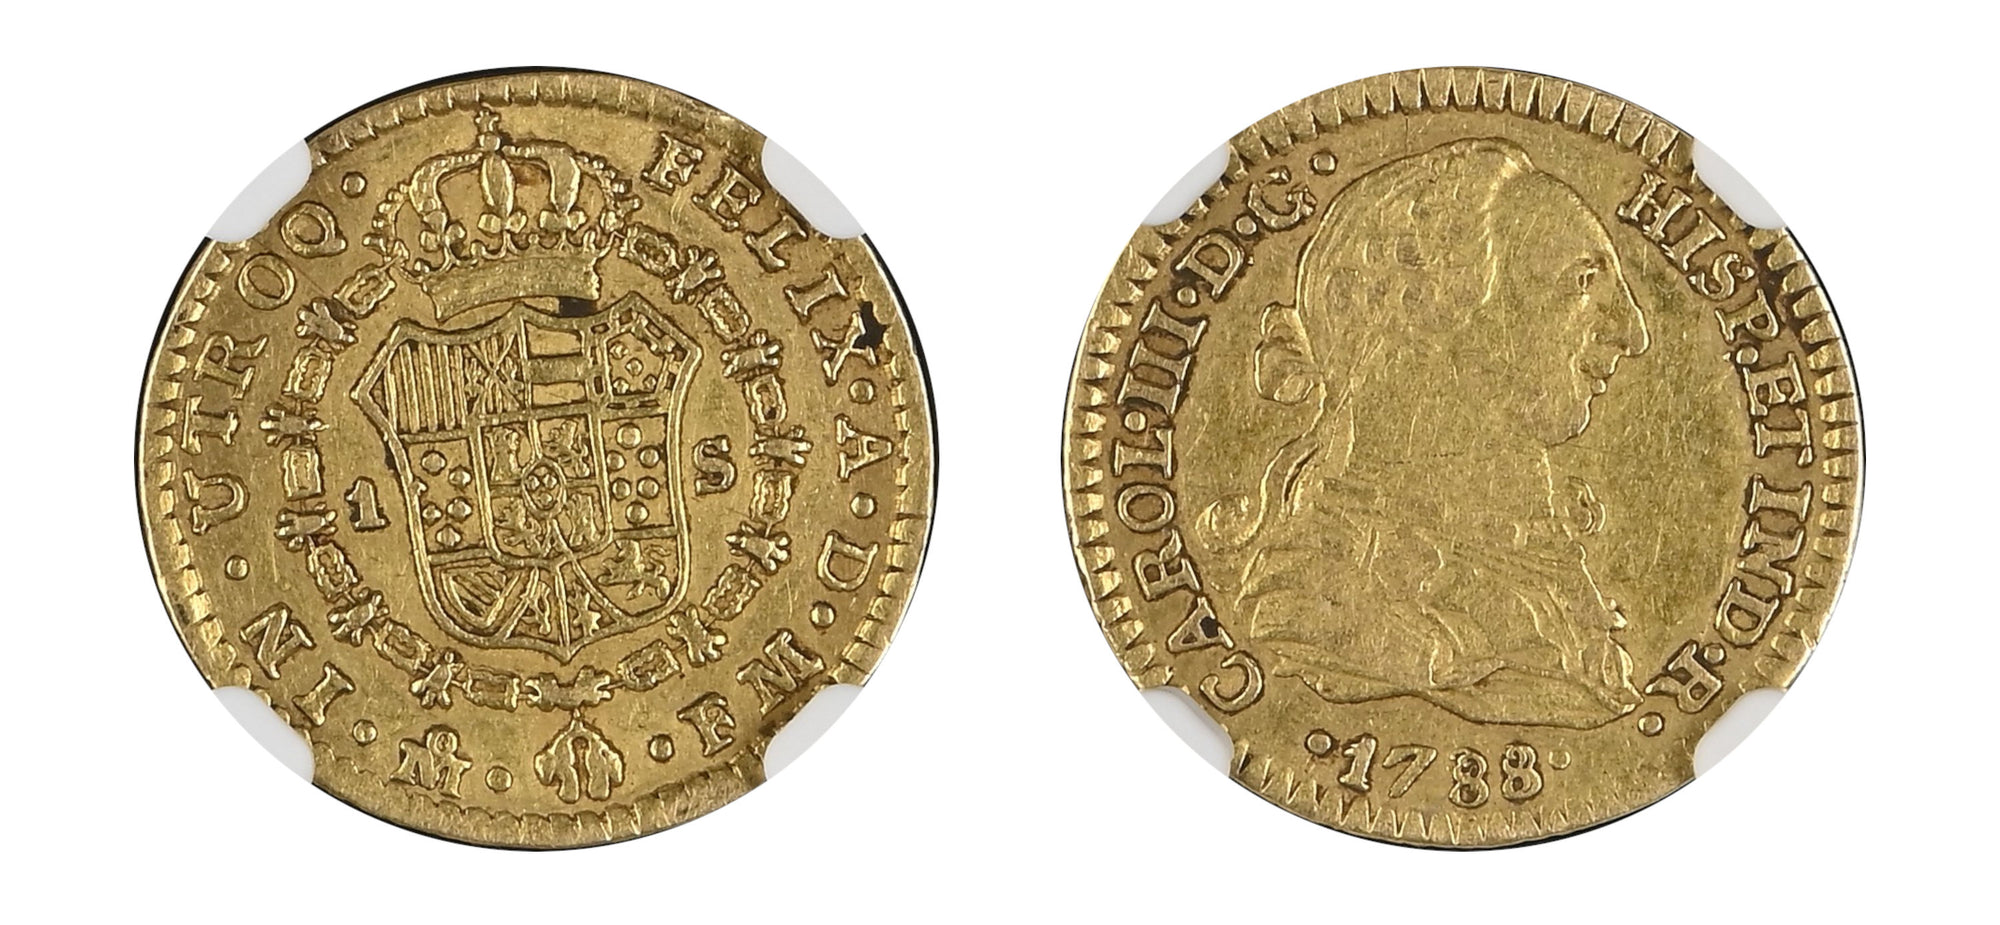 1788 Gold Escudo, Upright Mint NGC AU53 - Hard Asset Management, Inc